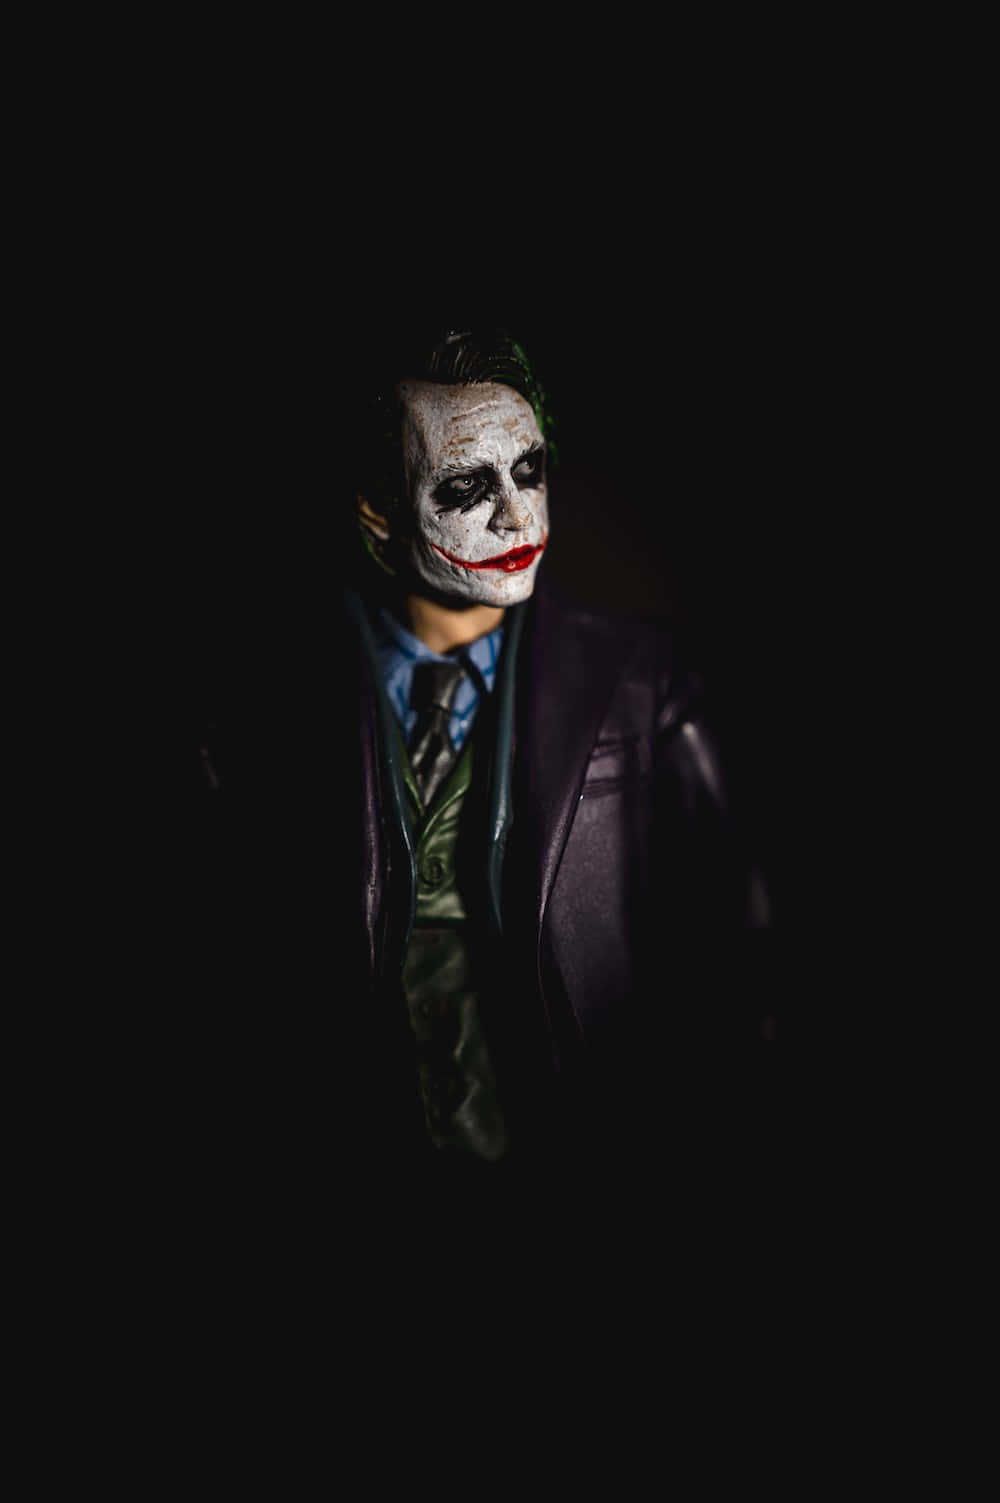 100+] Dark Joker Wallpapers for FREE | Wallpapers.com